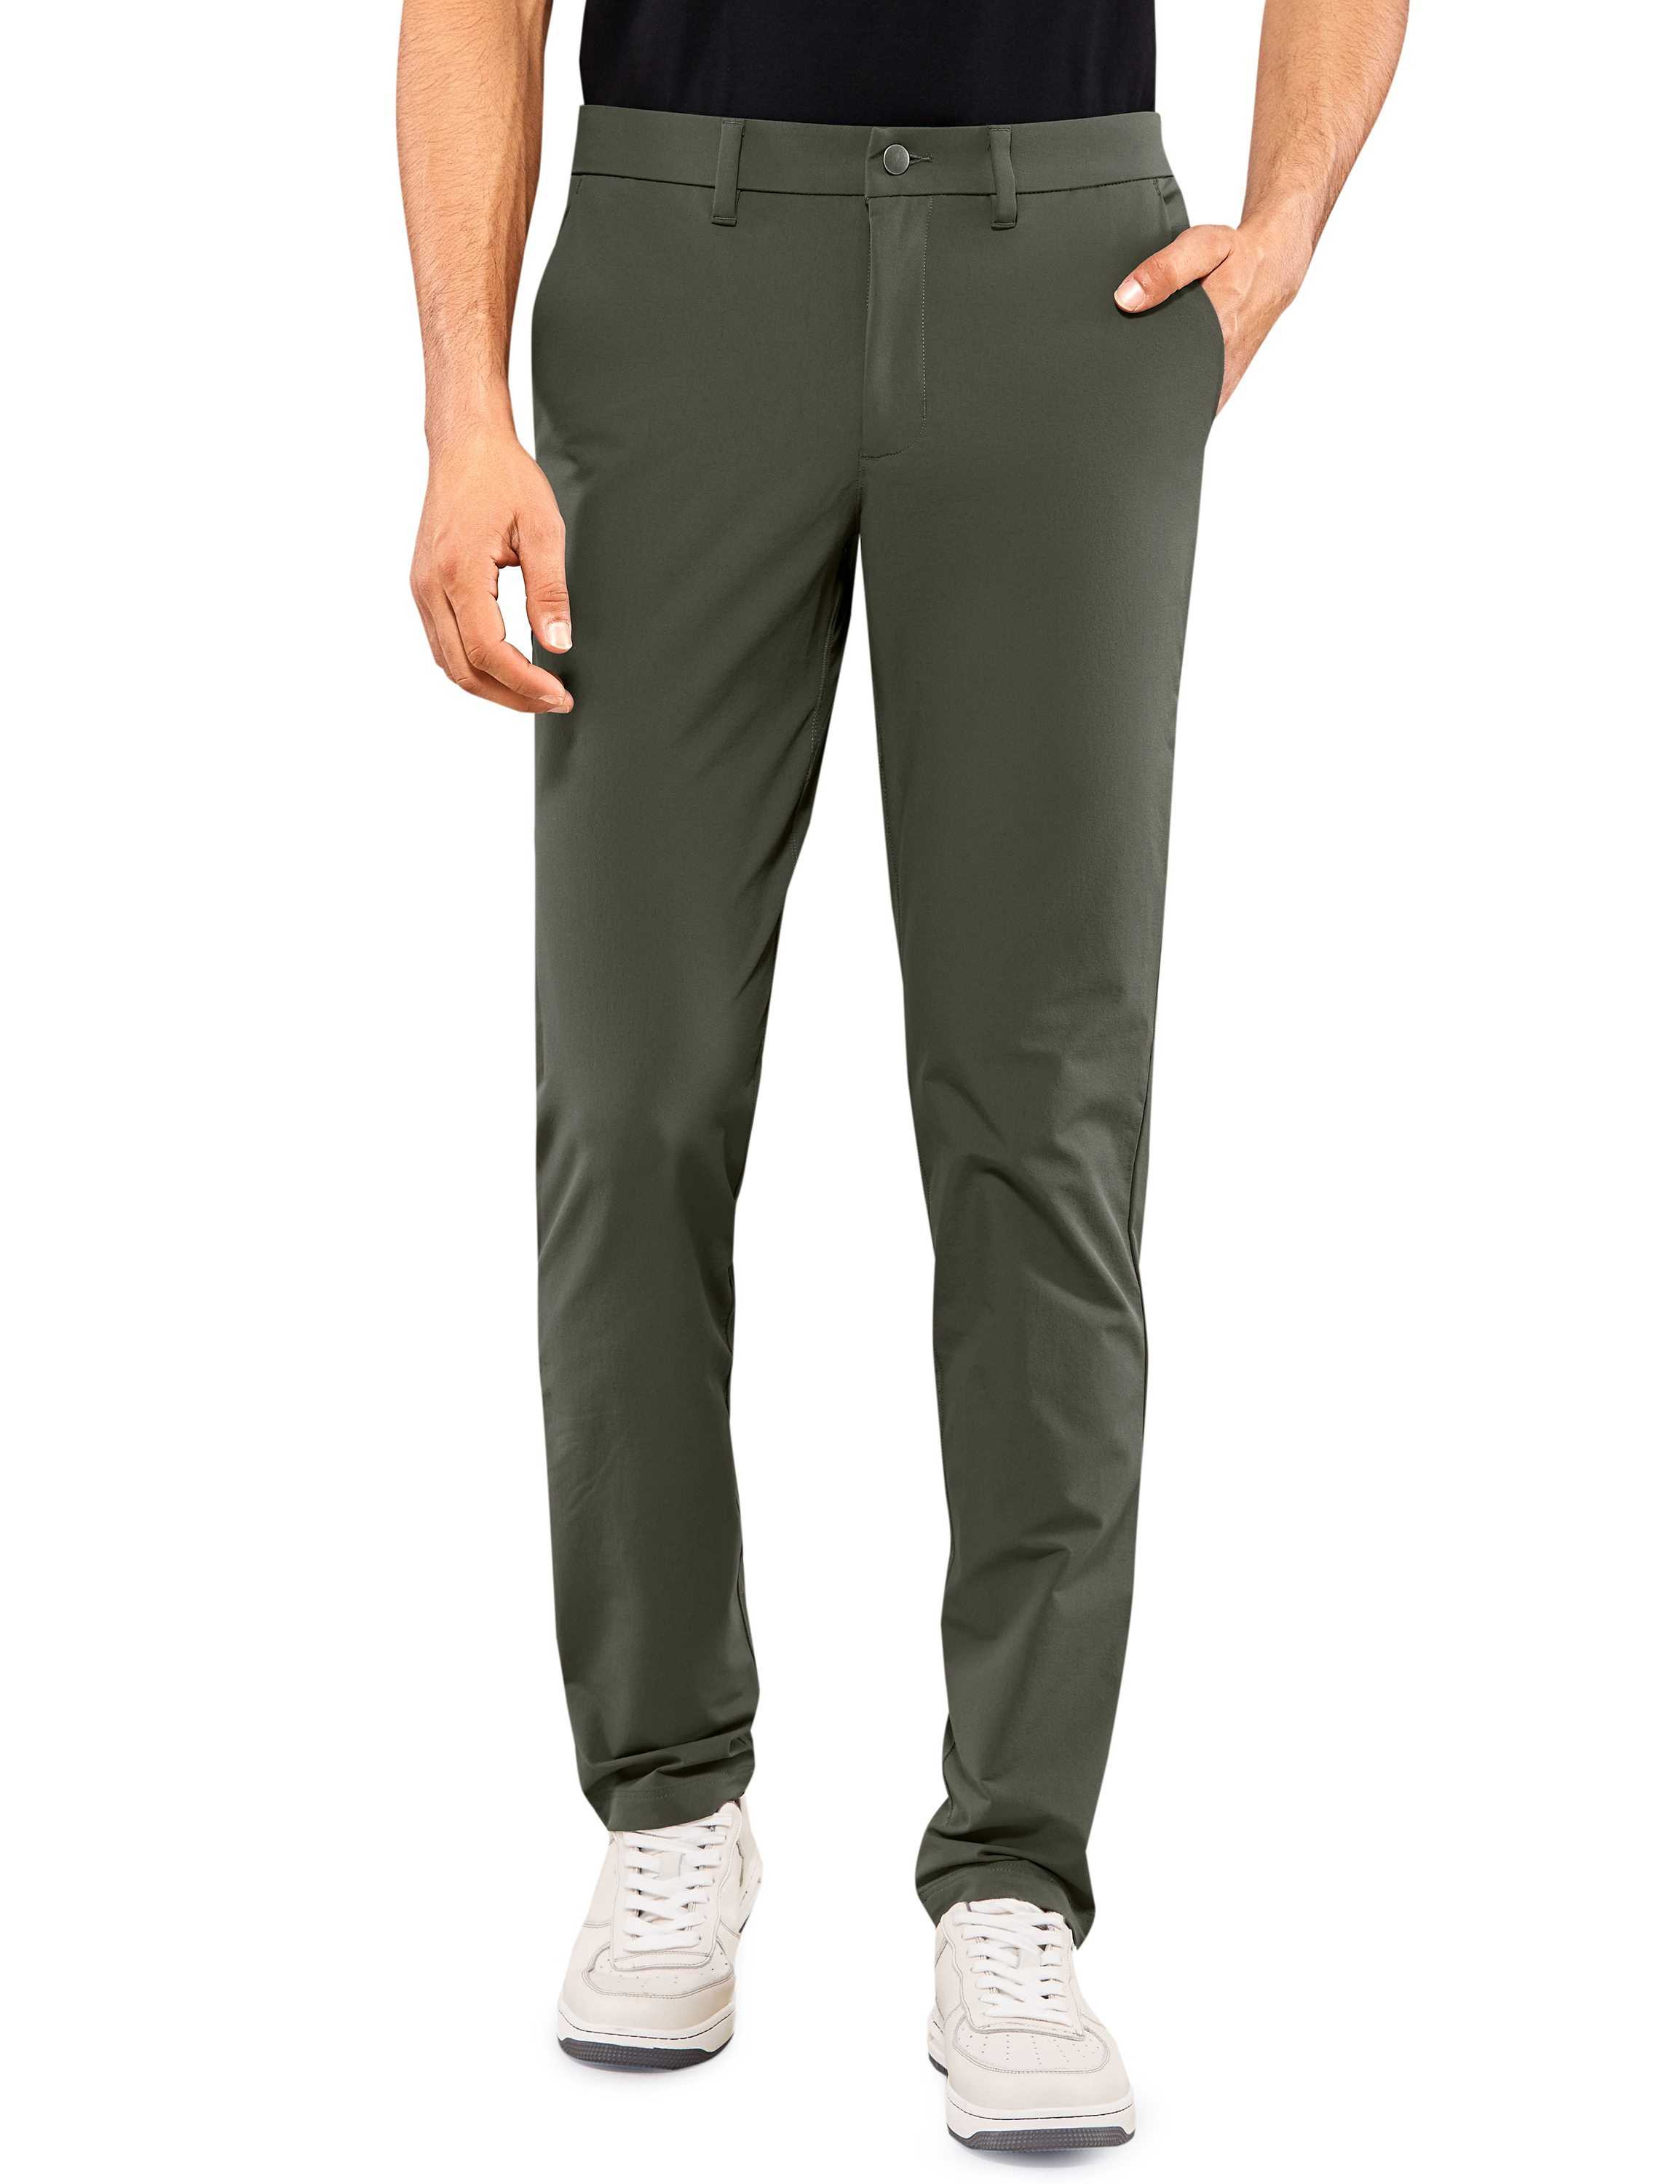 CRZ YOGA Men's Stretch Golf Pants 32 Slim Fit Quick Dry Thick Pant Pockets